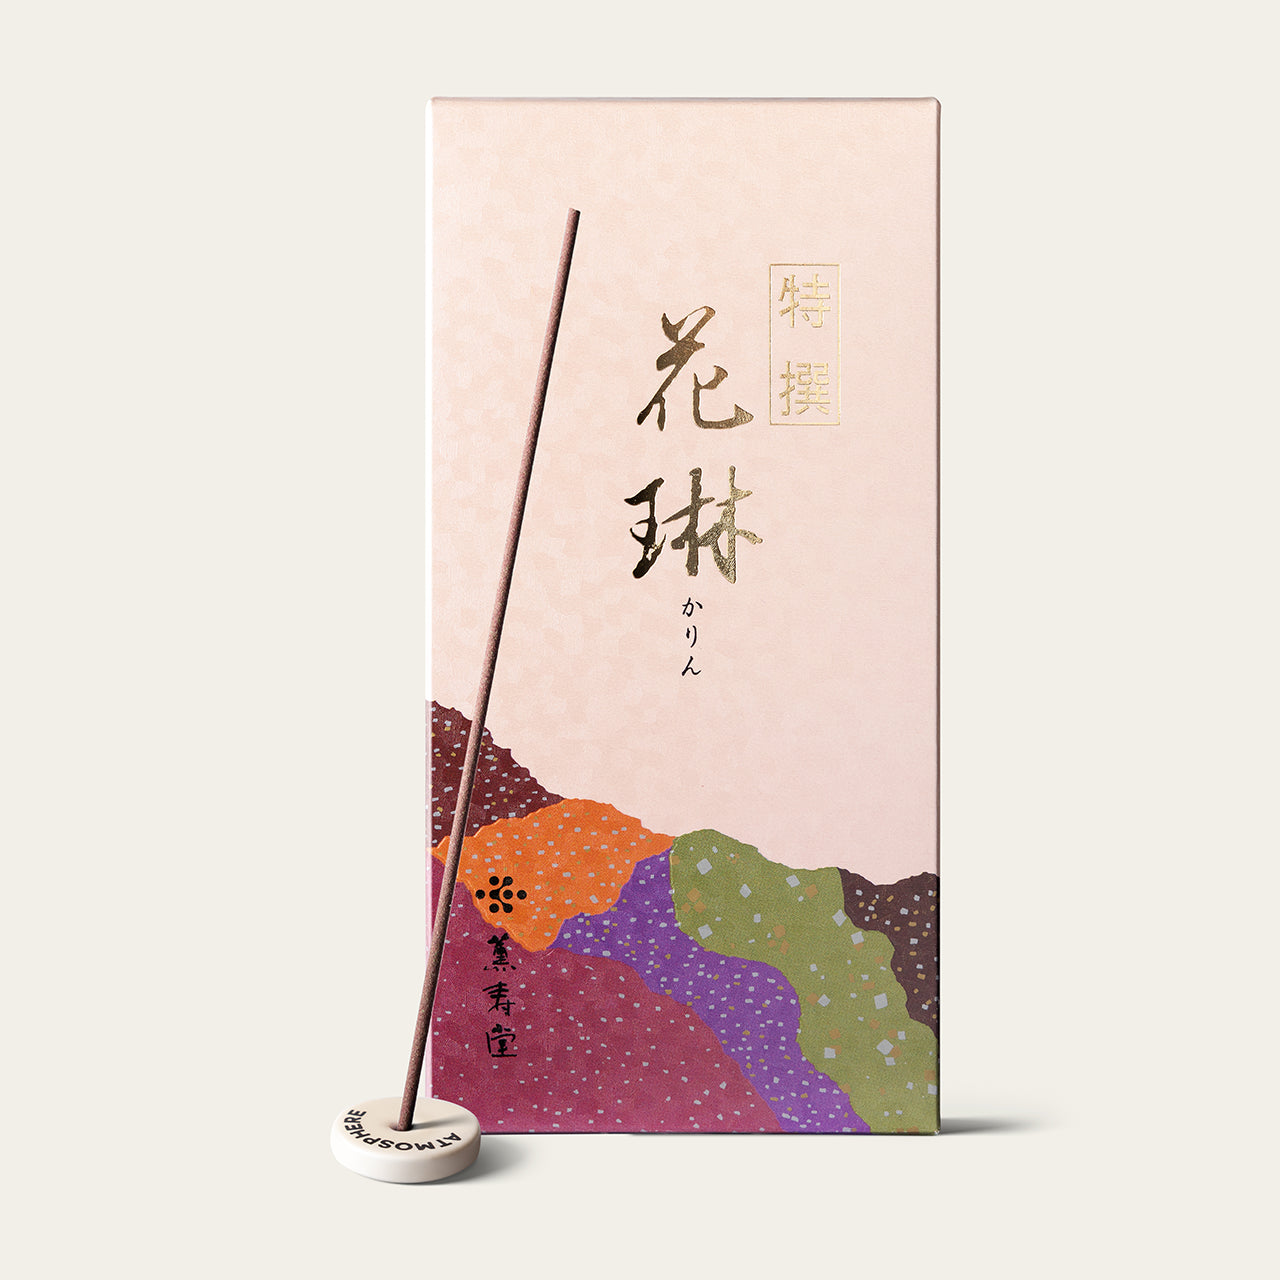 Kunjudo Karin Special Karin Tokusen Japanese incense sticks (220 sticks) with Atmosphere ceramic incense holder